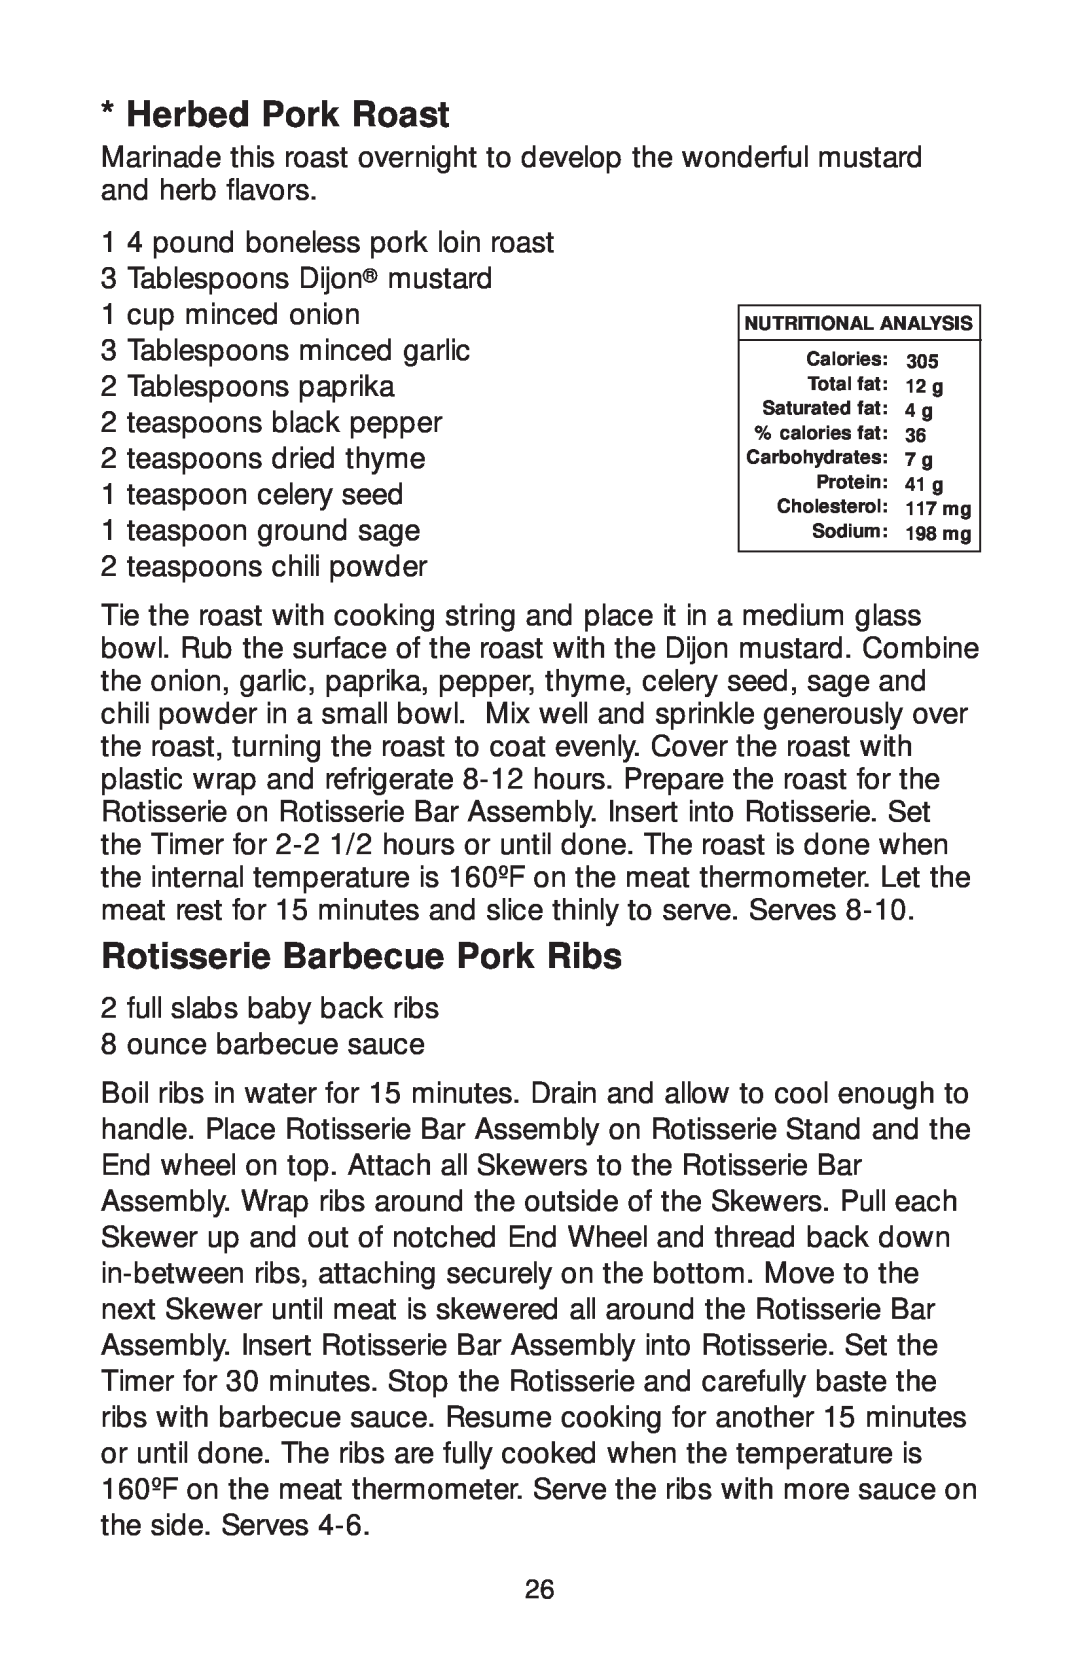 George Foreman GR82 owner manual Herbed Pork Roast, Rotisserie Barbecue Pork Ribs 